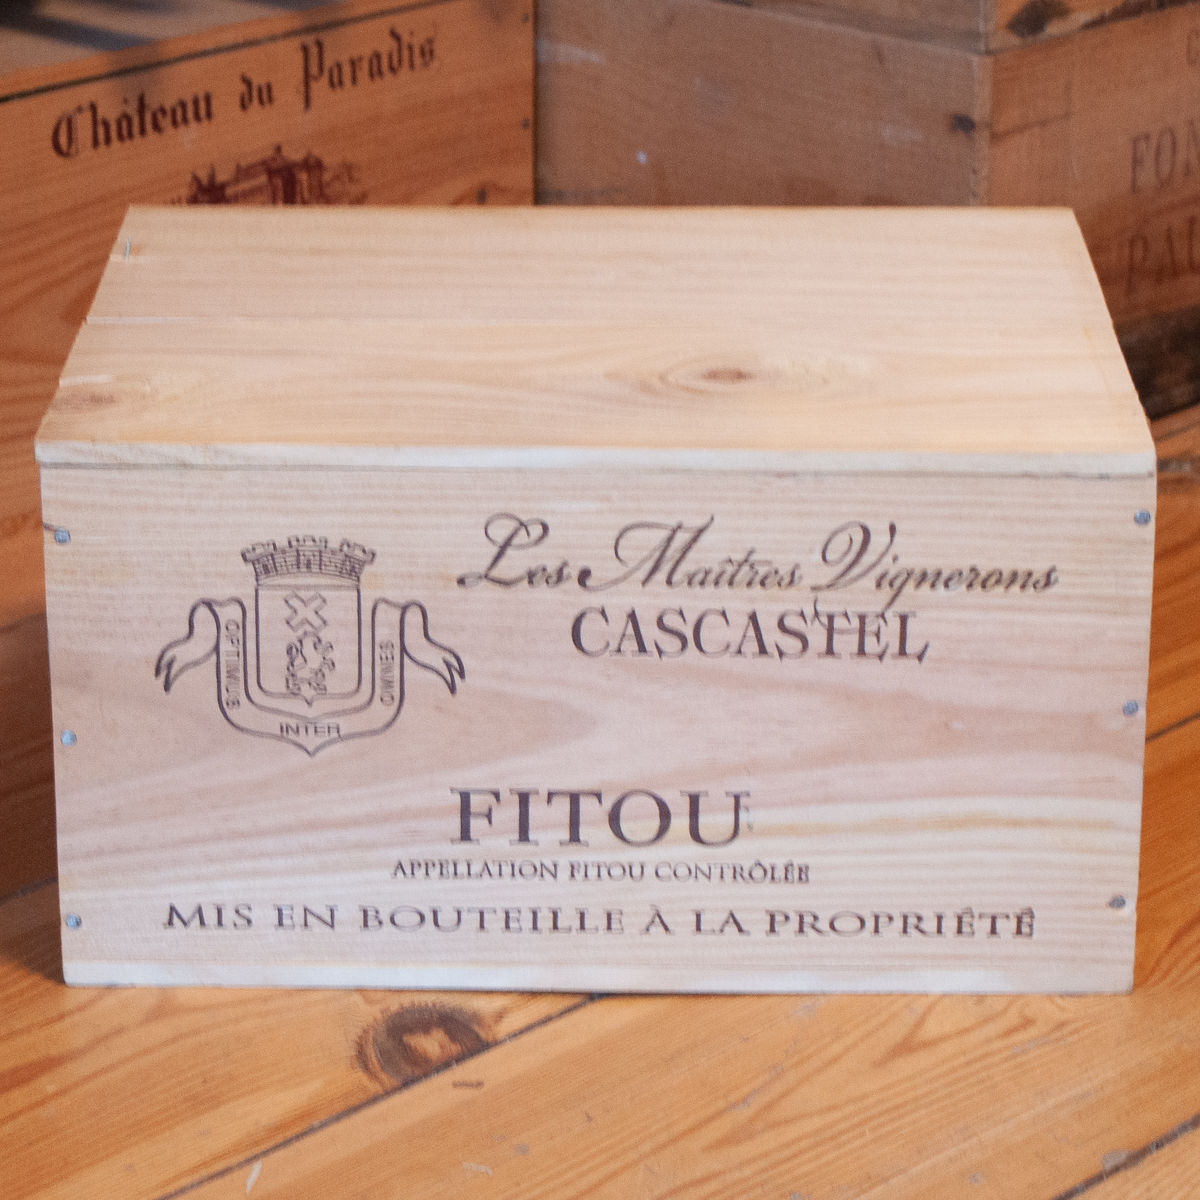 Cassetta di legno originale del Château Belair del 1998 per 6 bottiglie